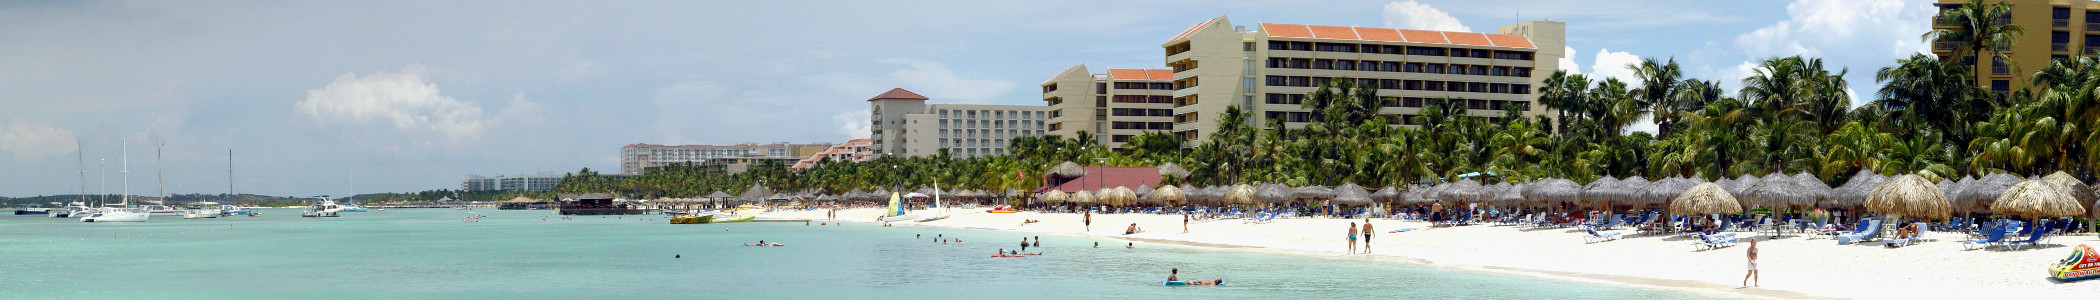 Aruba-banner.jpg